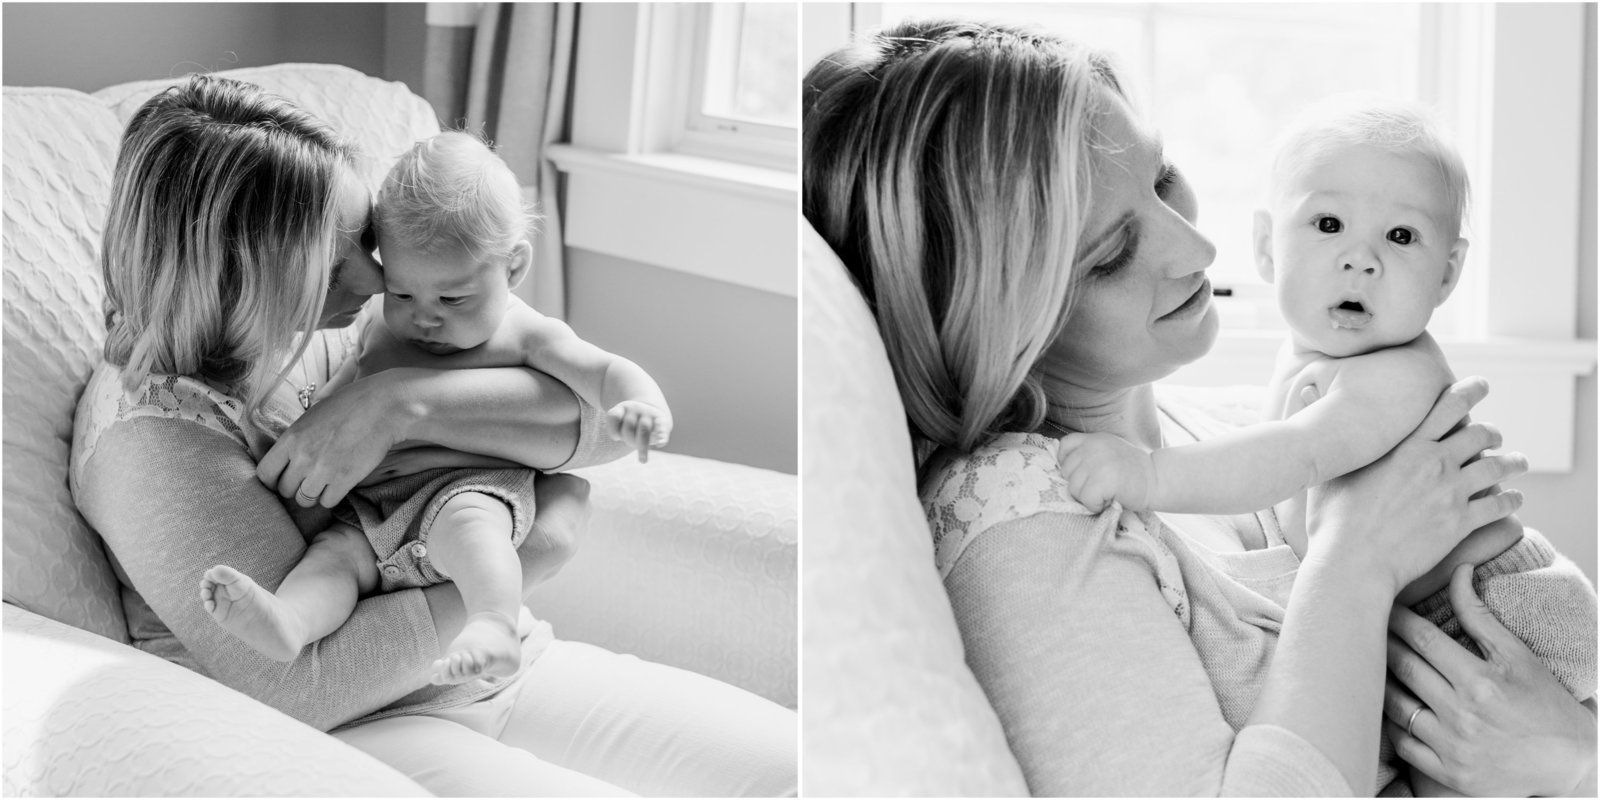 Kelly Morgan - Baby & Child Photographer - Westport CT - 1